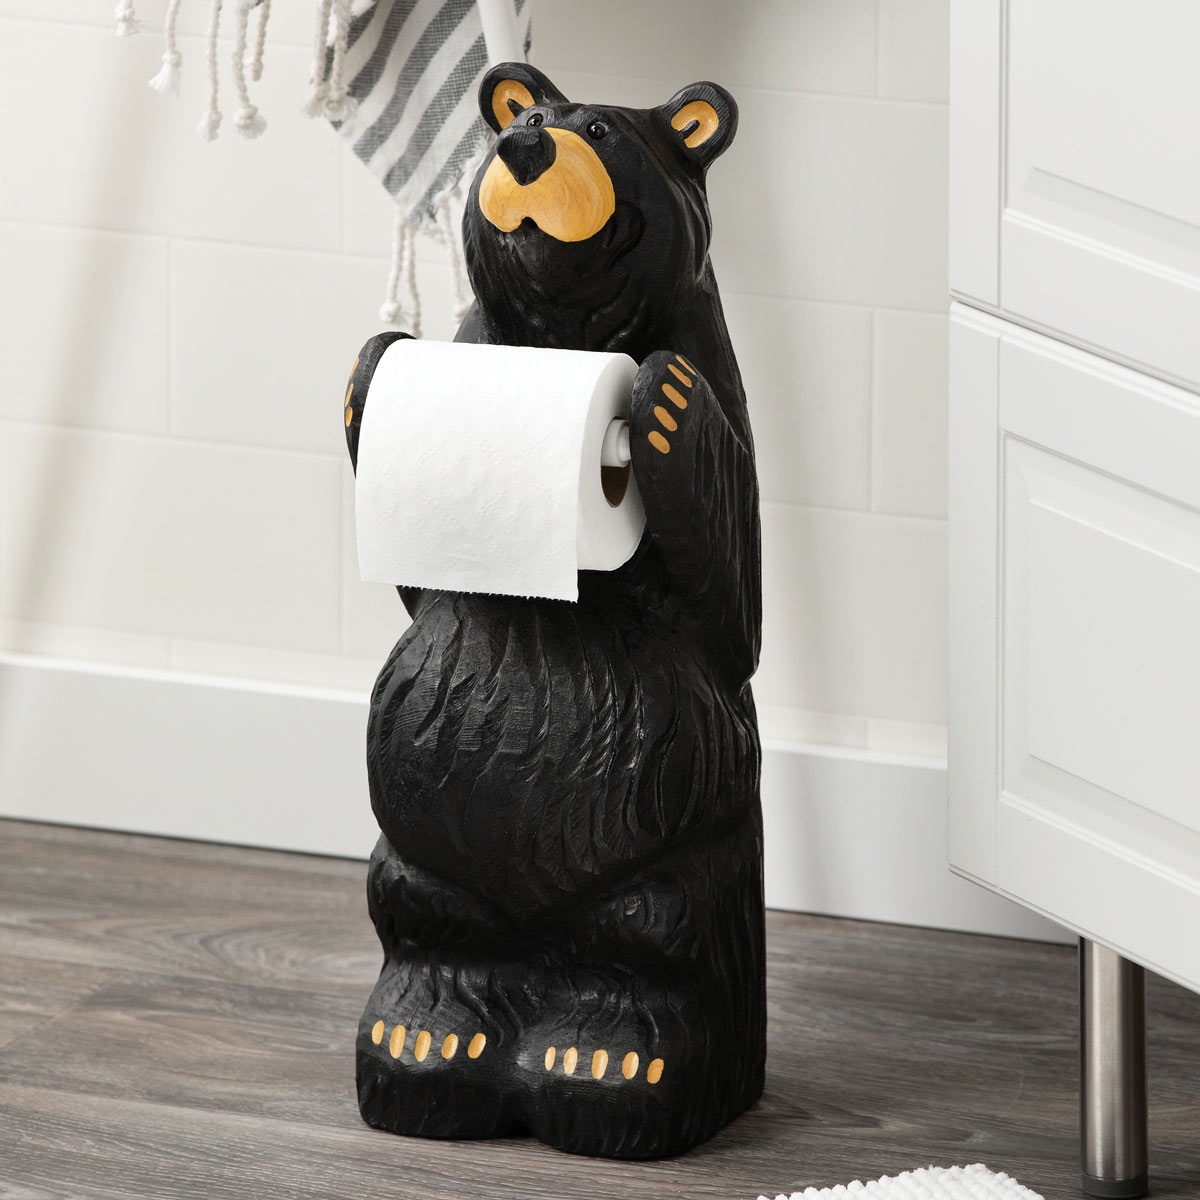 Bear Necessities Toilet Paper Holder - Log Cabin Decor, Black Forest Decor SIX9397